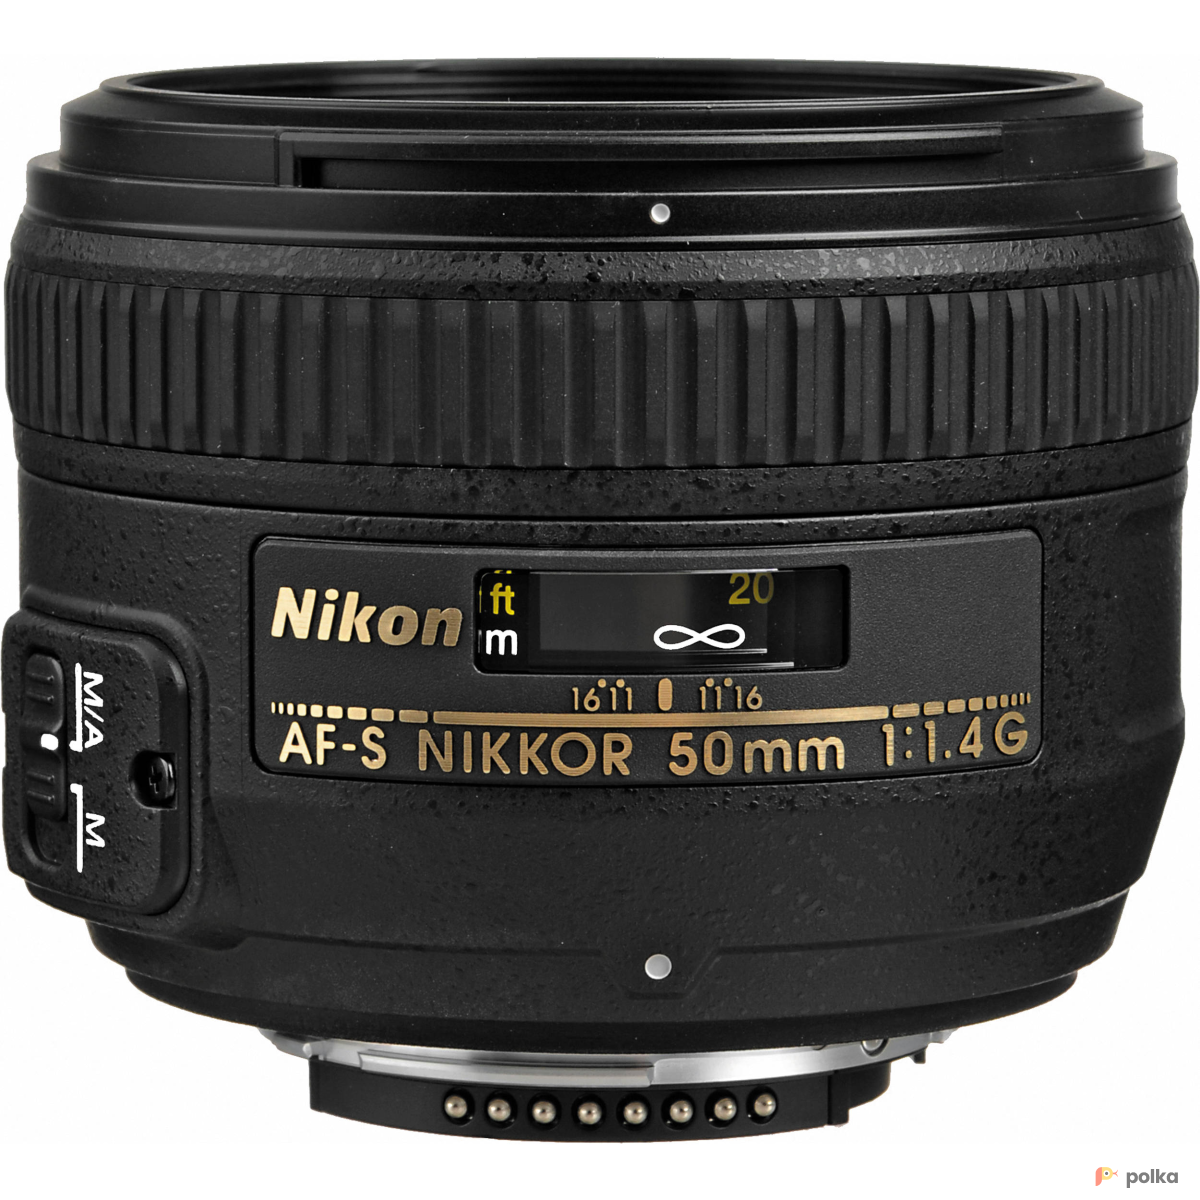 Возьмите Nikon AF-S 50 f/1.4G Nikkor напрокат (Фото 2) в Москве